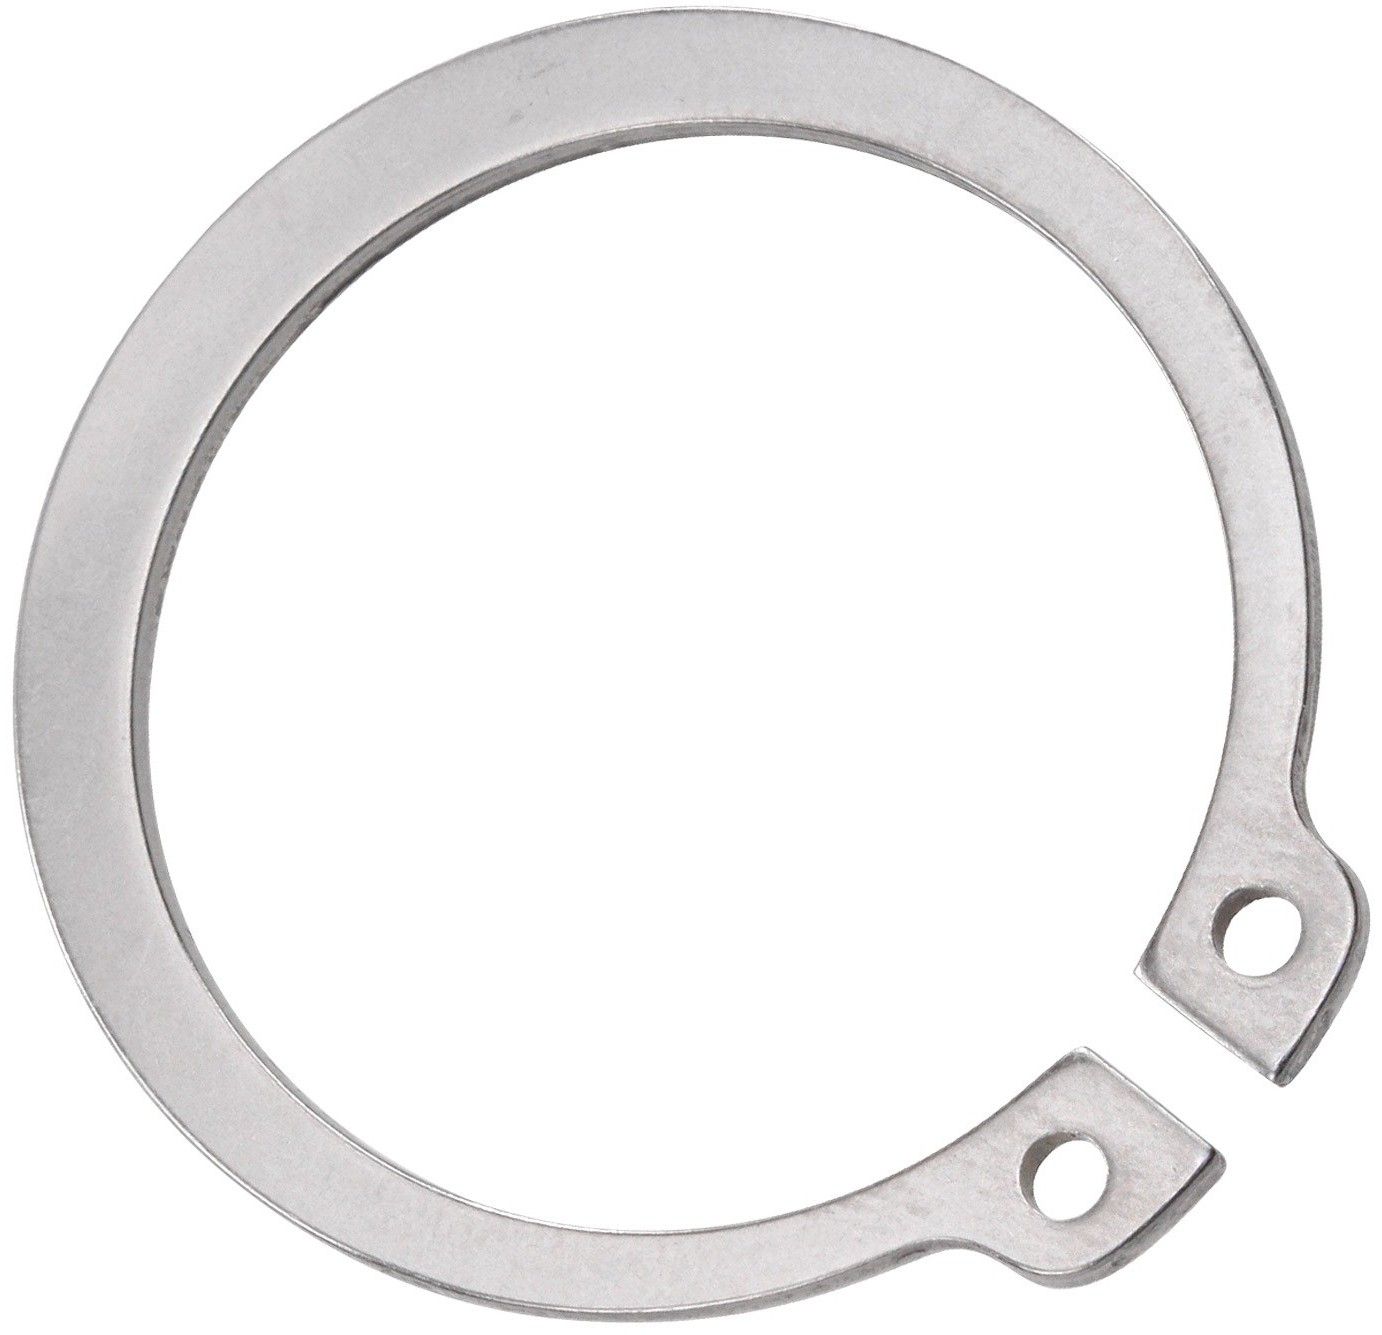 Кольцо стопорное наружное 85х3 DIN 471, нержавеющая сталь 1.4122 (А2) - фото